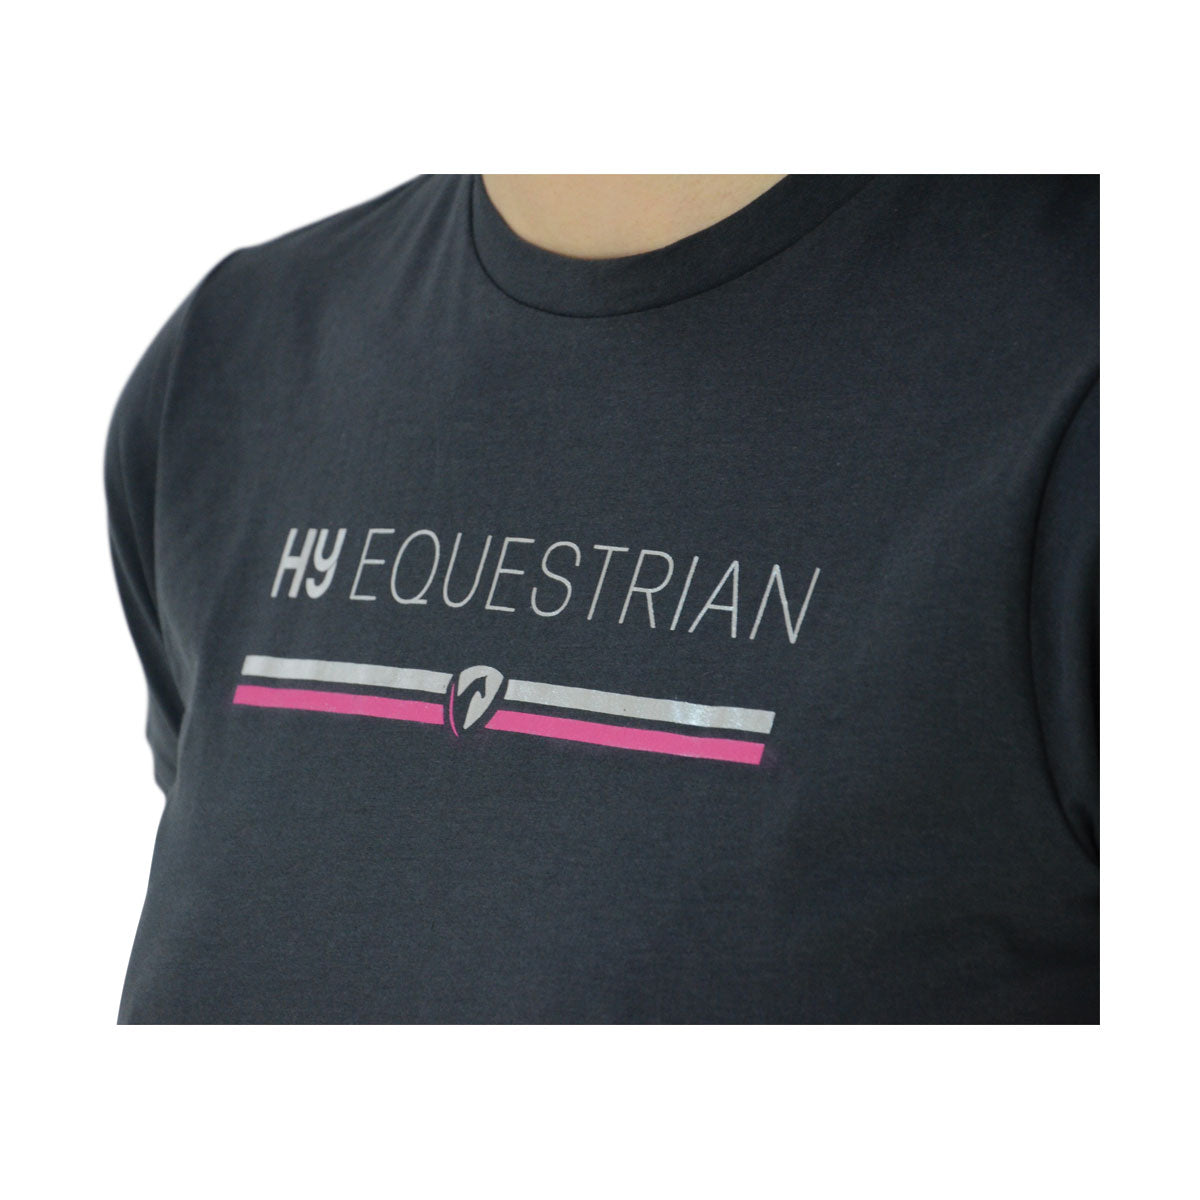 Hy Equestrian T-Shirt